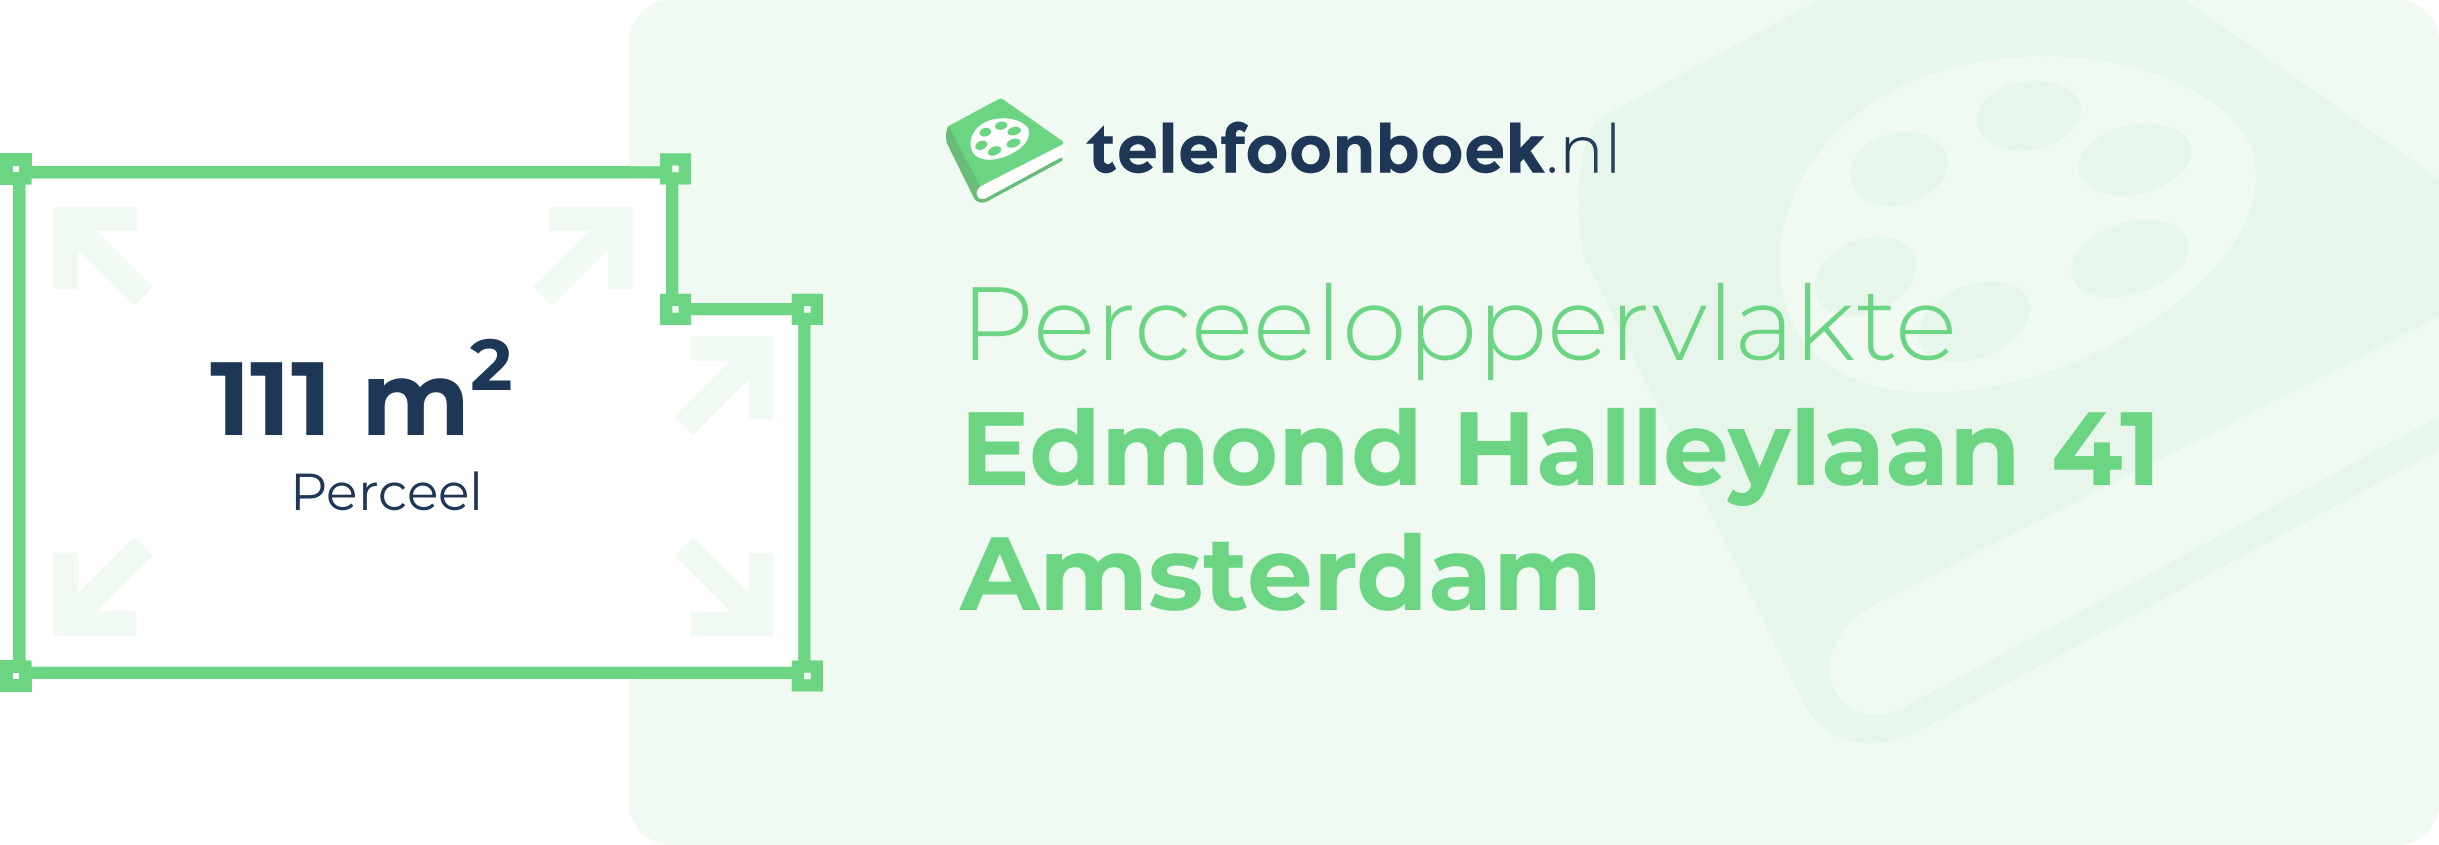 Perceeloppervlakte Edmond Halleylaan 41 Amsterdam